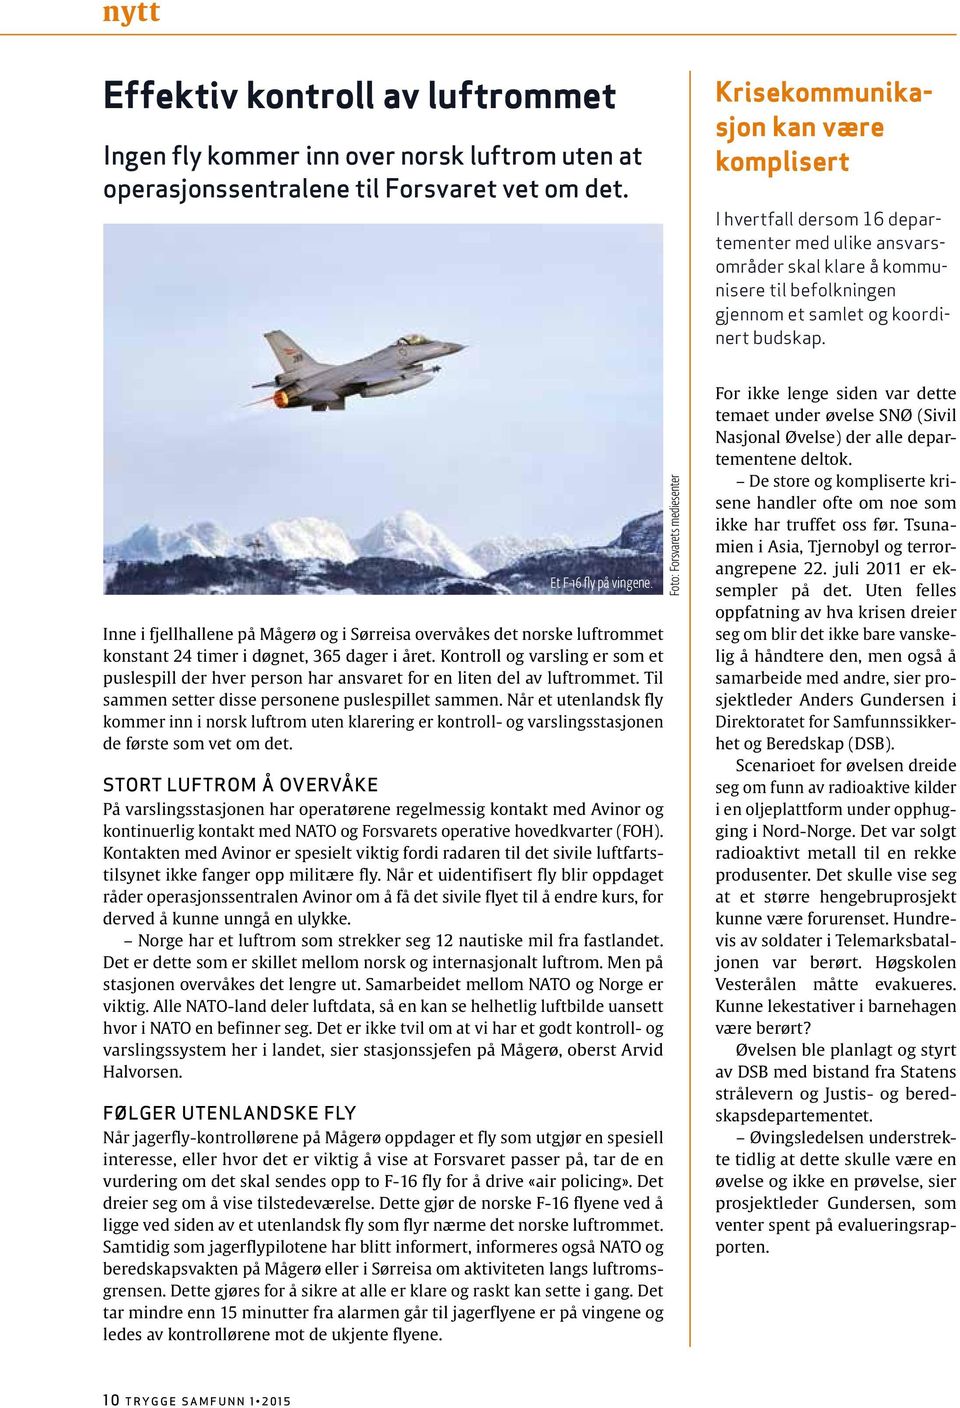 Et F-16 fly på vingene. Inne i fjellhallene på Mågerø og i Sørreisa overvåkes det norske luftrommet konstant 24 timer i døgnet, 365 dager i året.